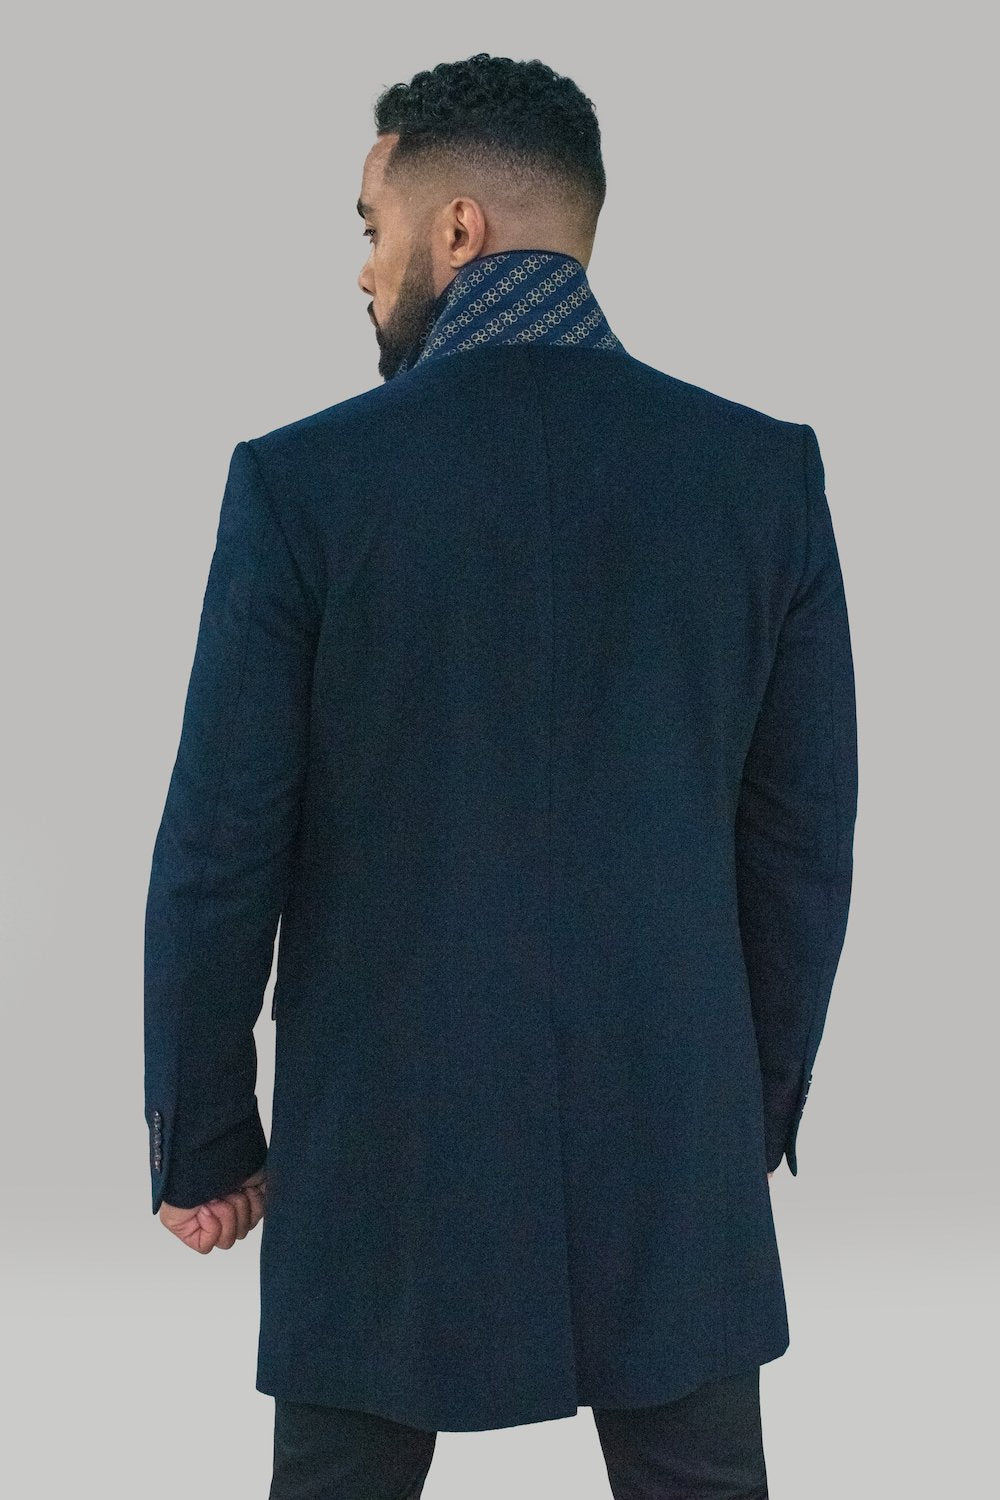 House of Cavani Wool Overcoat Navy Blue Jacket  3/4 Length  - Roman